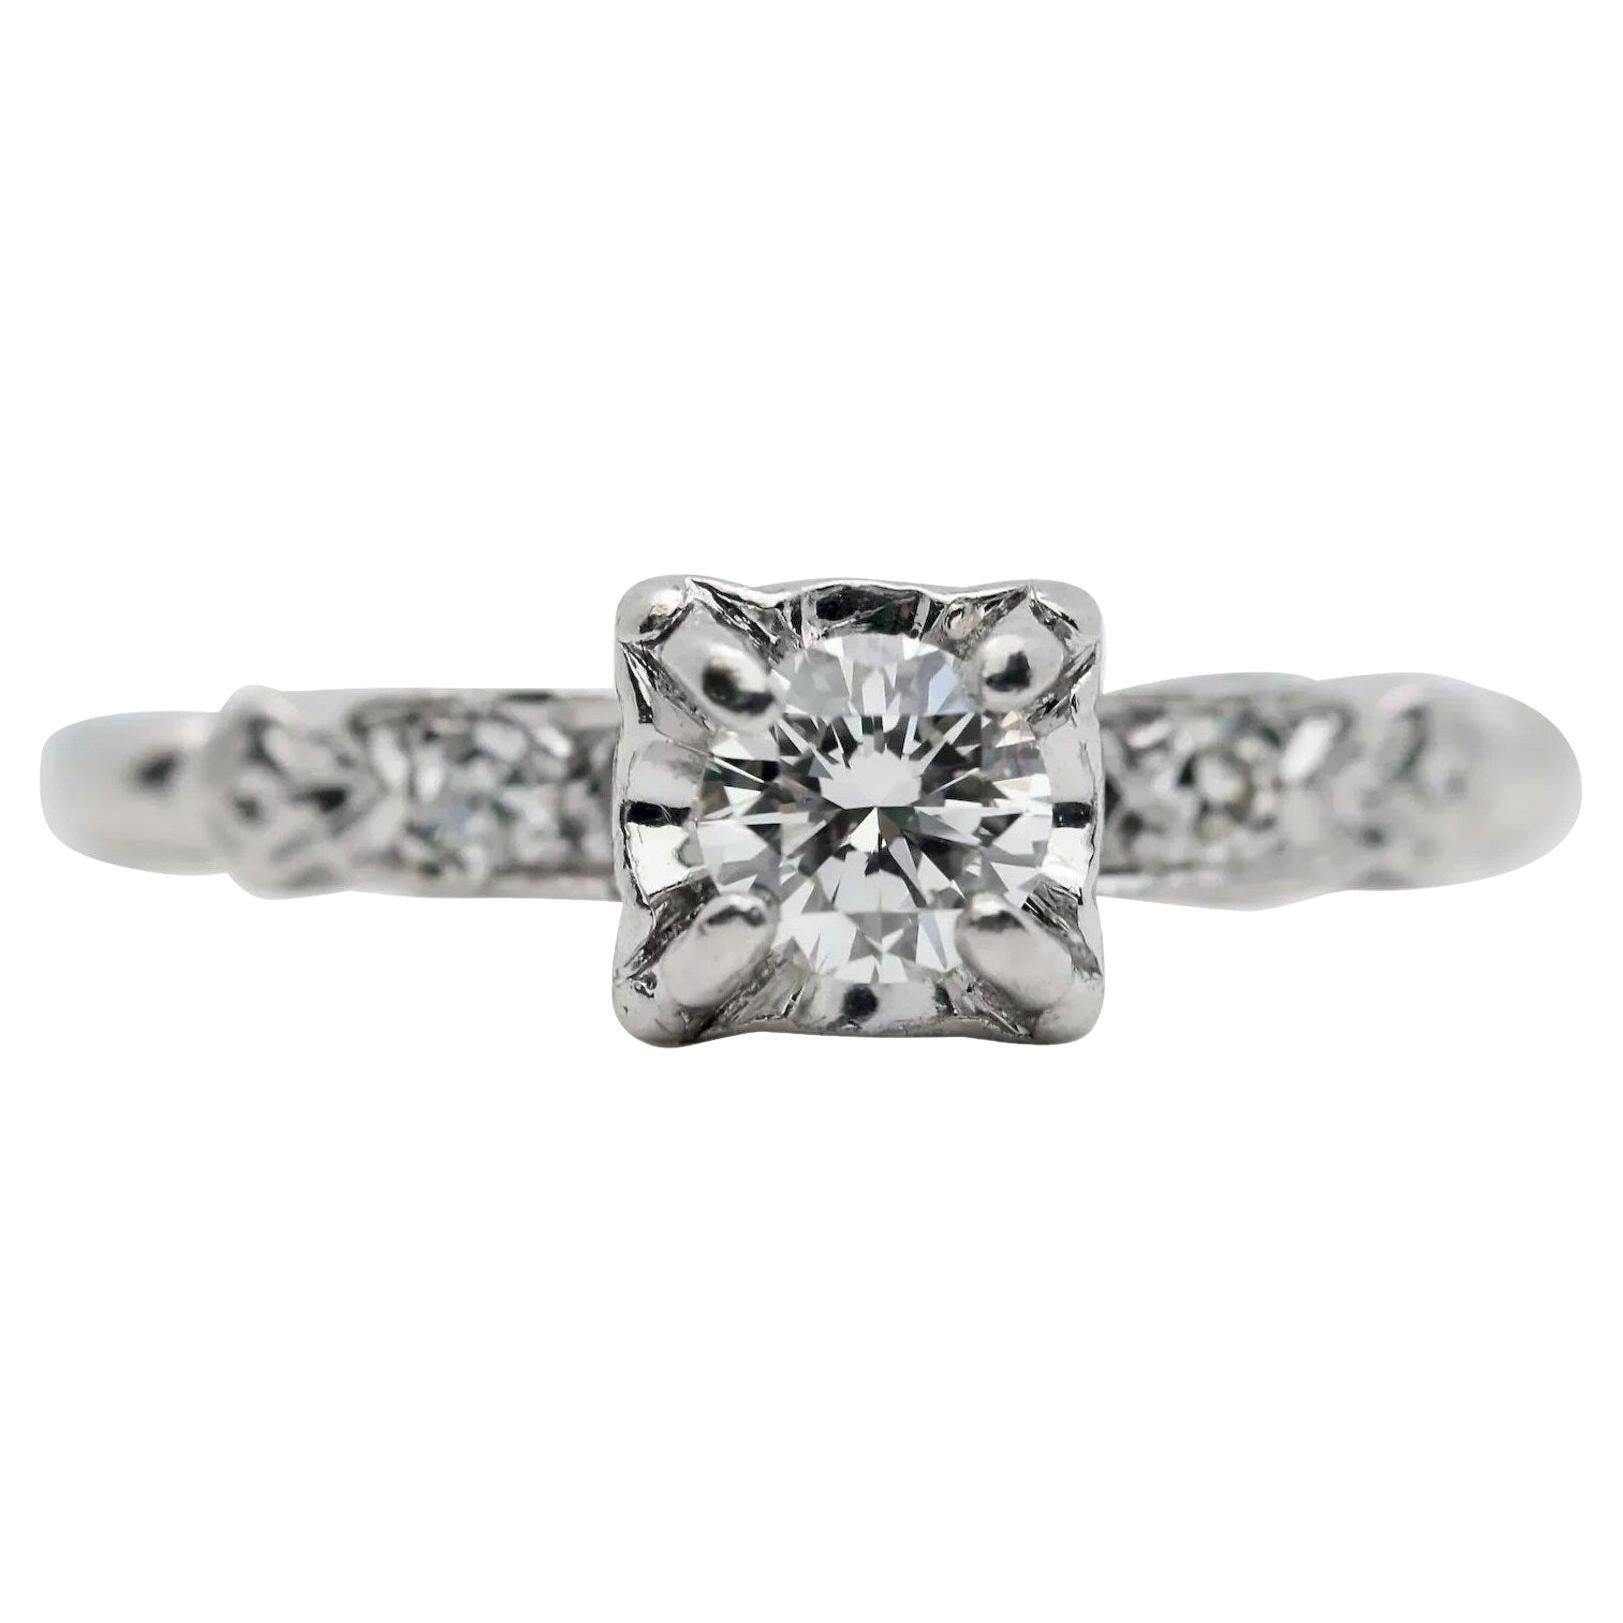 Vintage 1940's 0.29 Carat Diamond Engagement Ring in Platinum For Sale